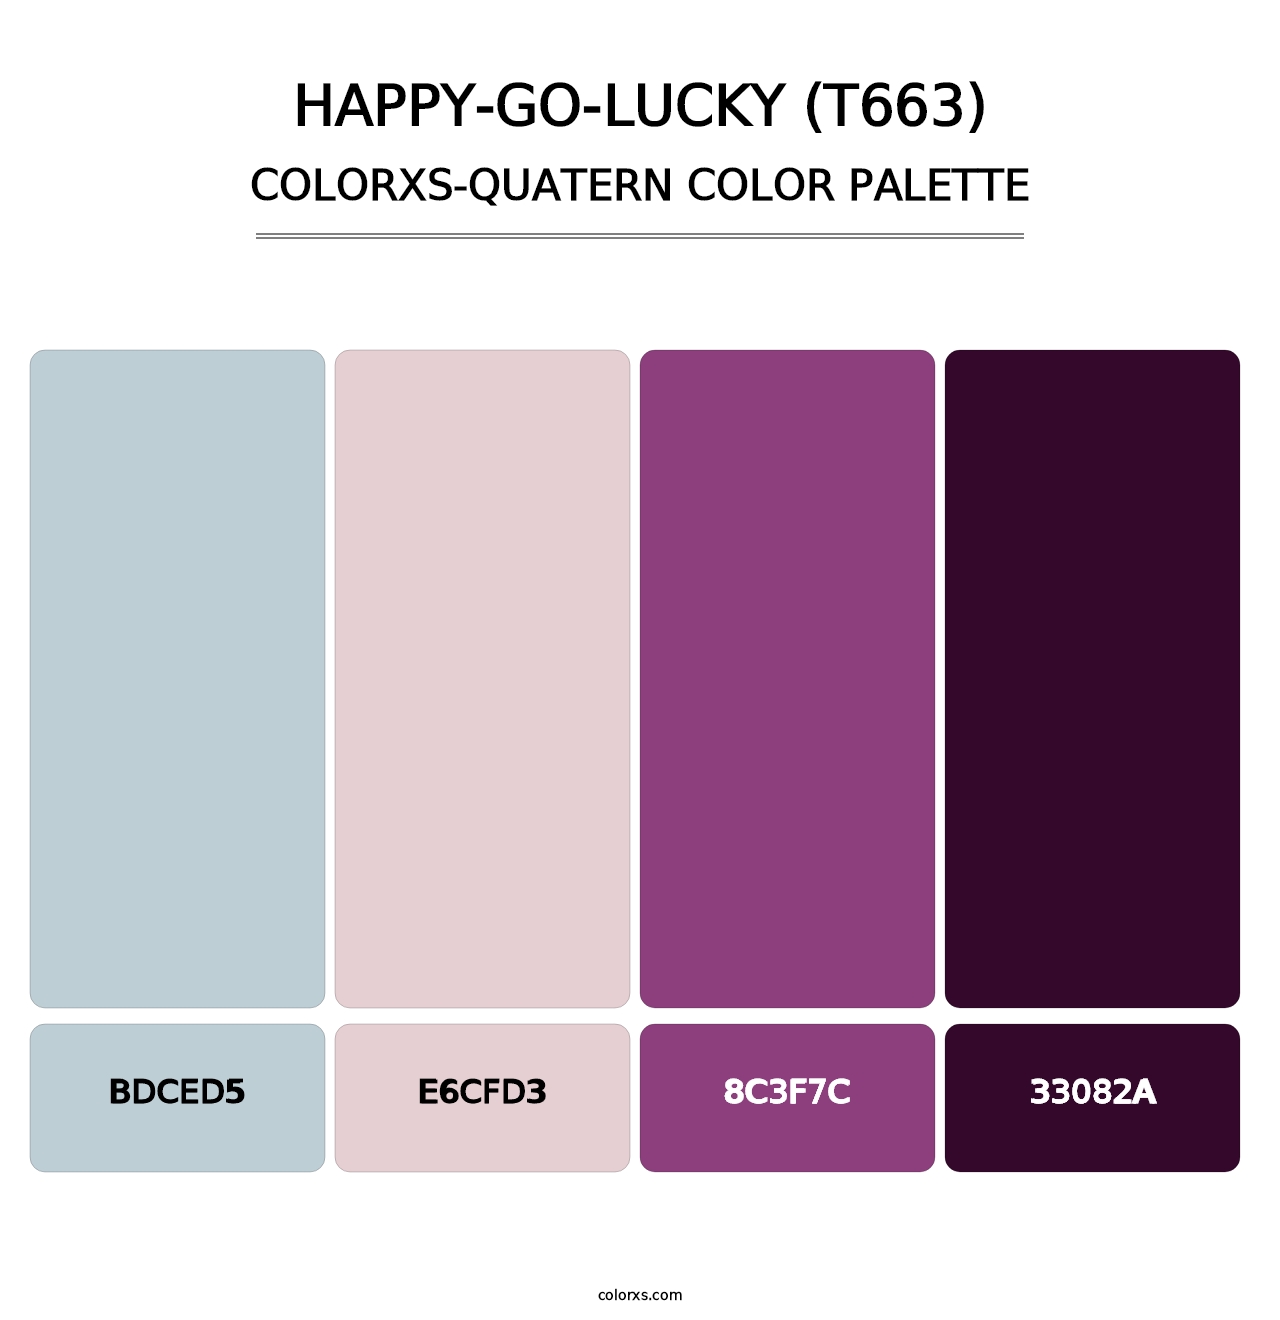 Happy-Go-Lucky (T663) - Colorxs Quatern Palette